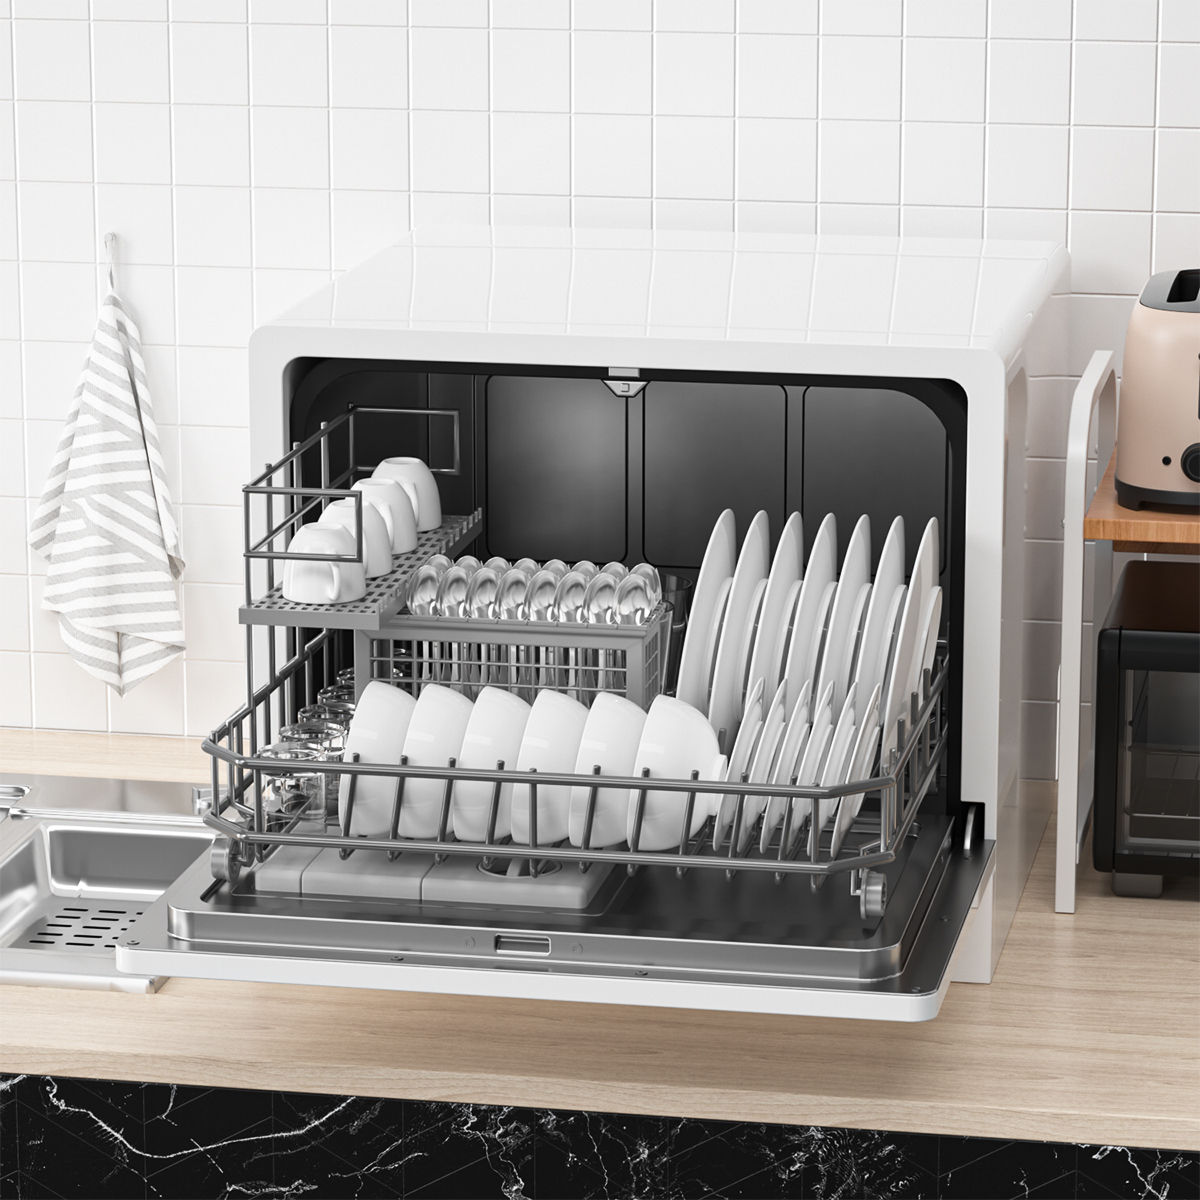 Warmto-6-Piece-Countertop-Dishwasher-Counter-Top-Dishwasher-Machine-Delay-Start-LED-Display-5-Washin-1931541-19